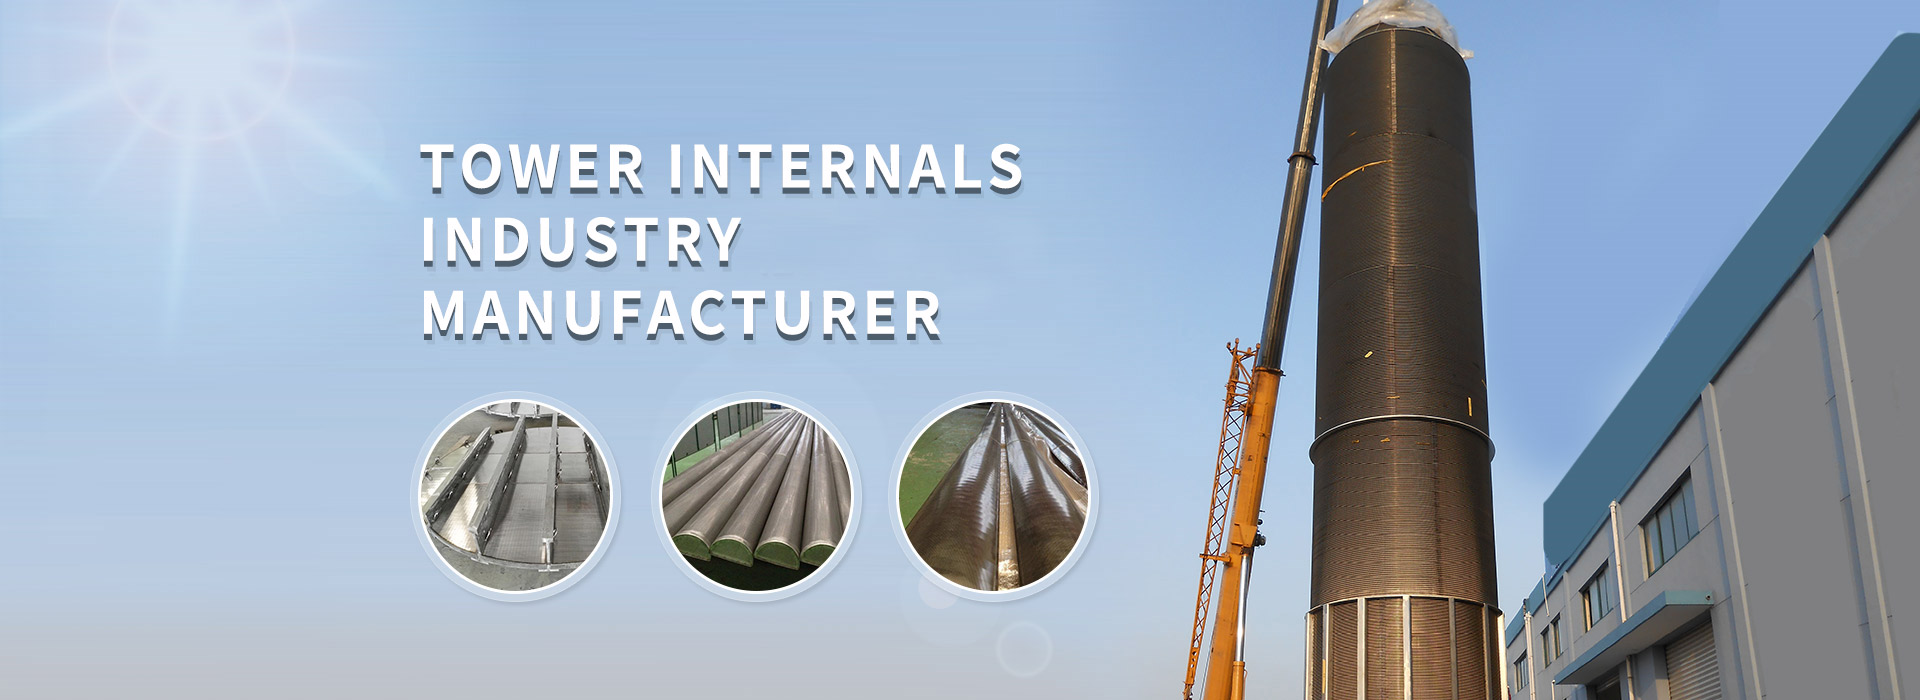 Tower Internals Industry Manufacturer